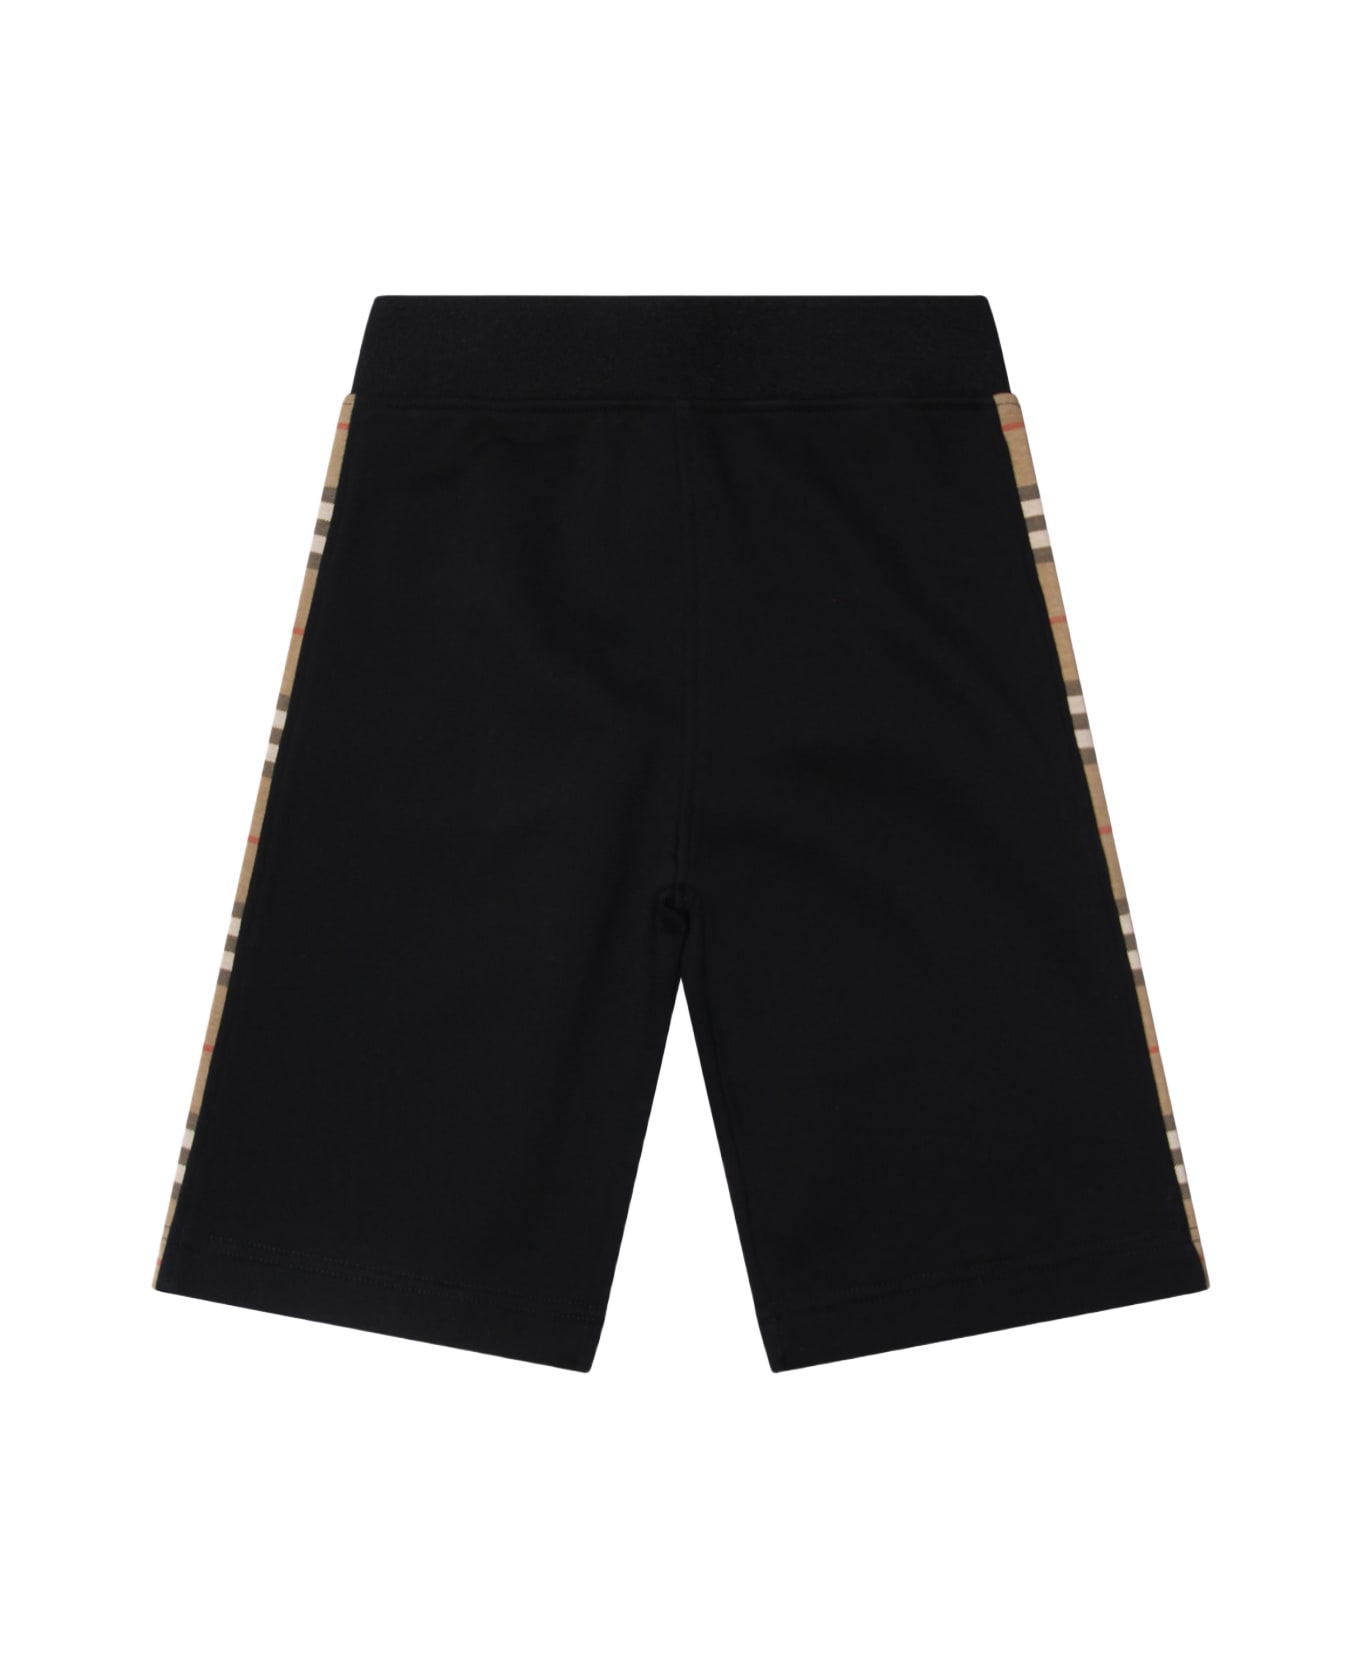 Burberry Black Cotton Shorts - Black